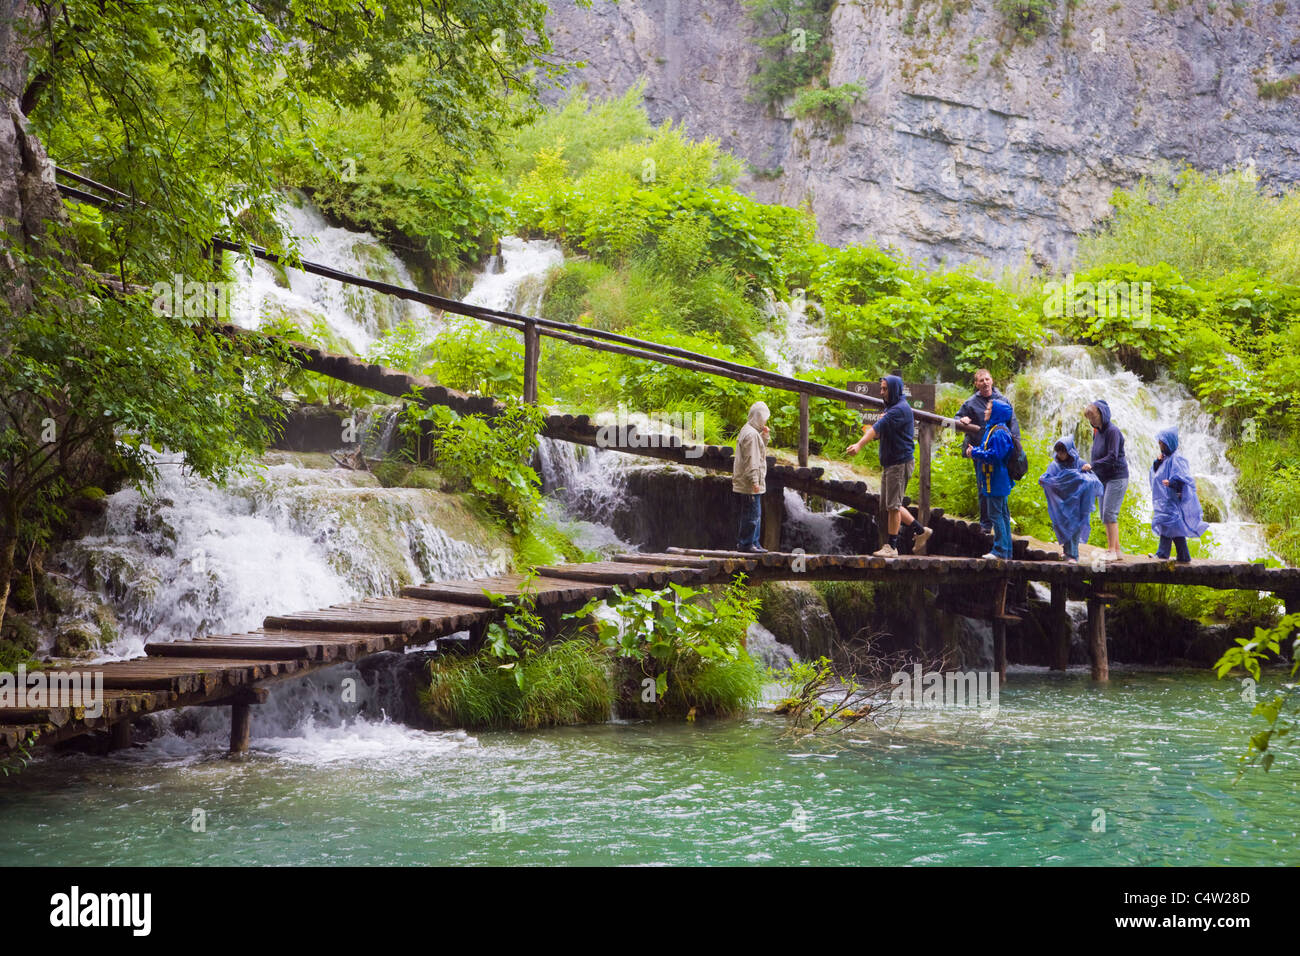 Tourists on the path at Plitvicka Jezera, Plitvice Lakes National Park, Lika-Senj, Croatia Stock Photo